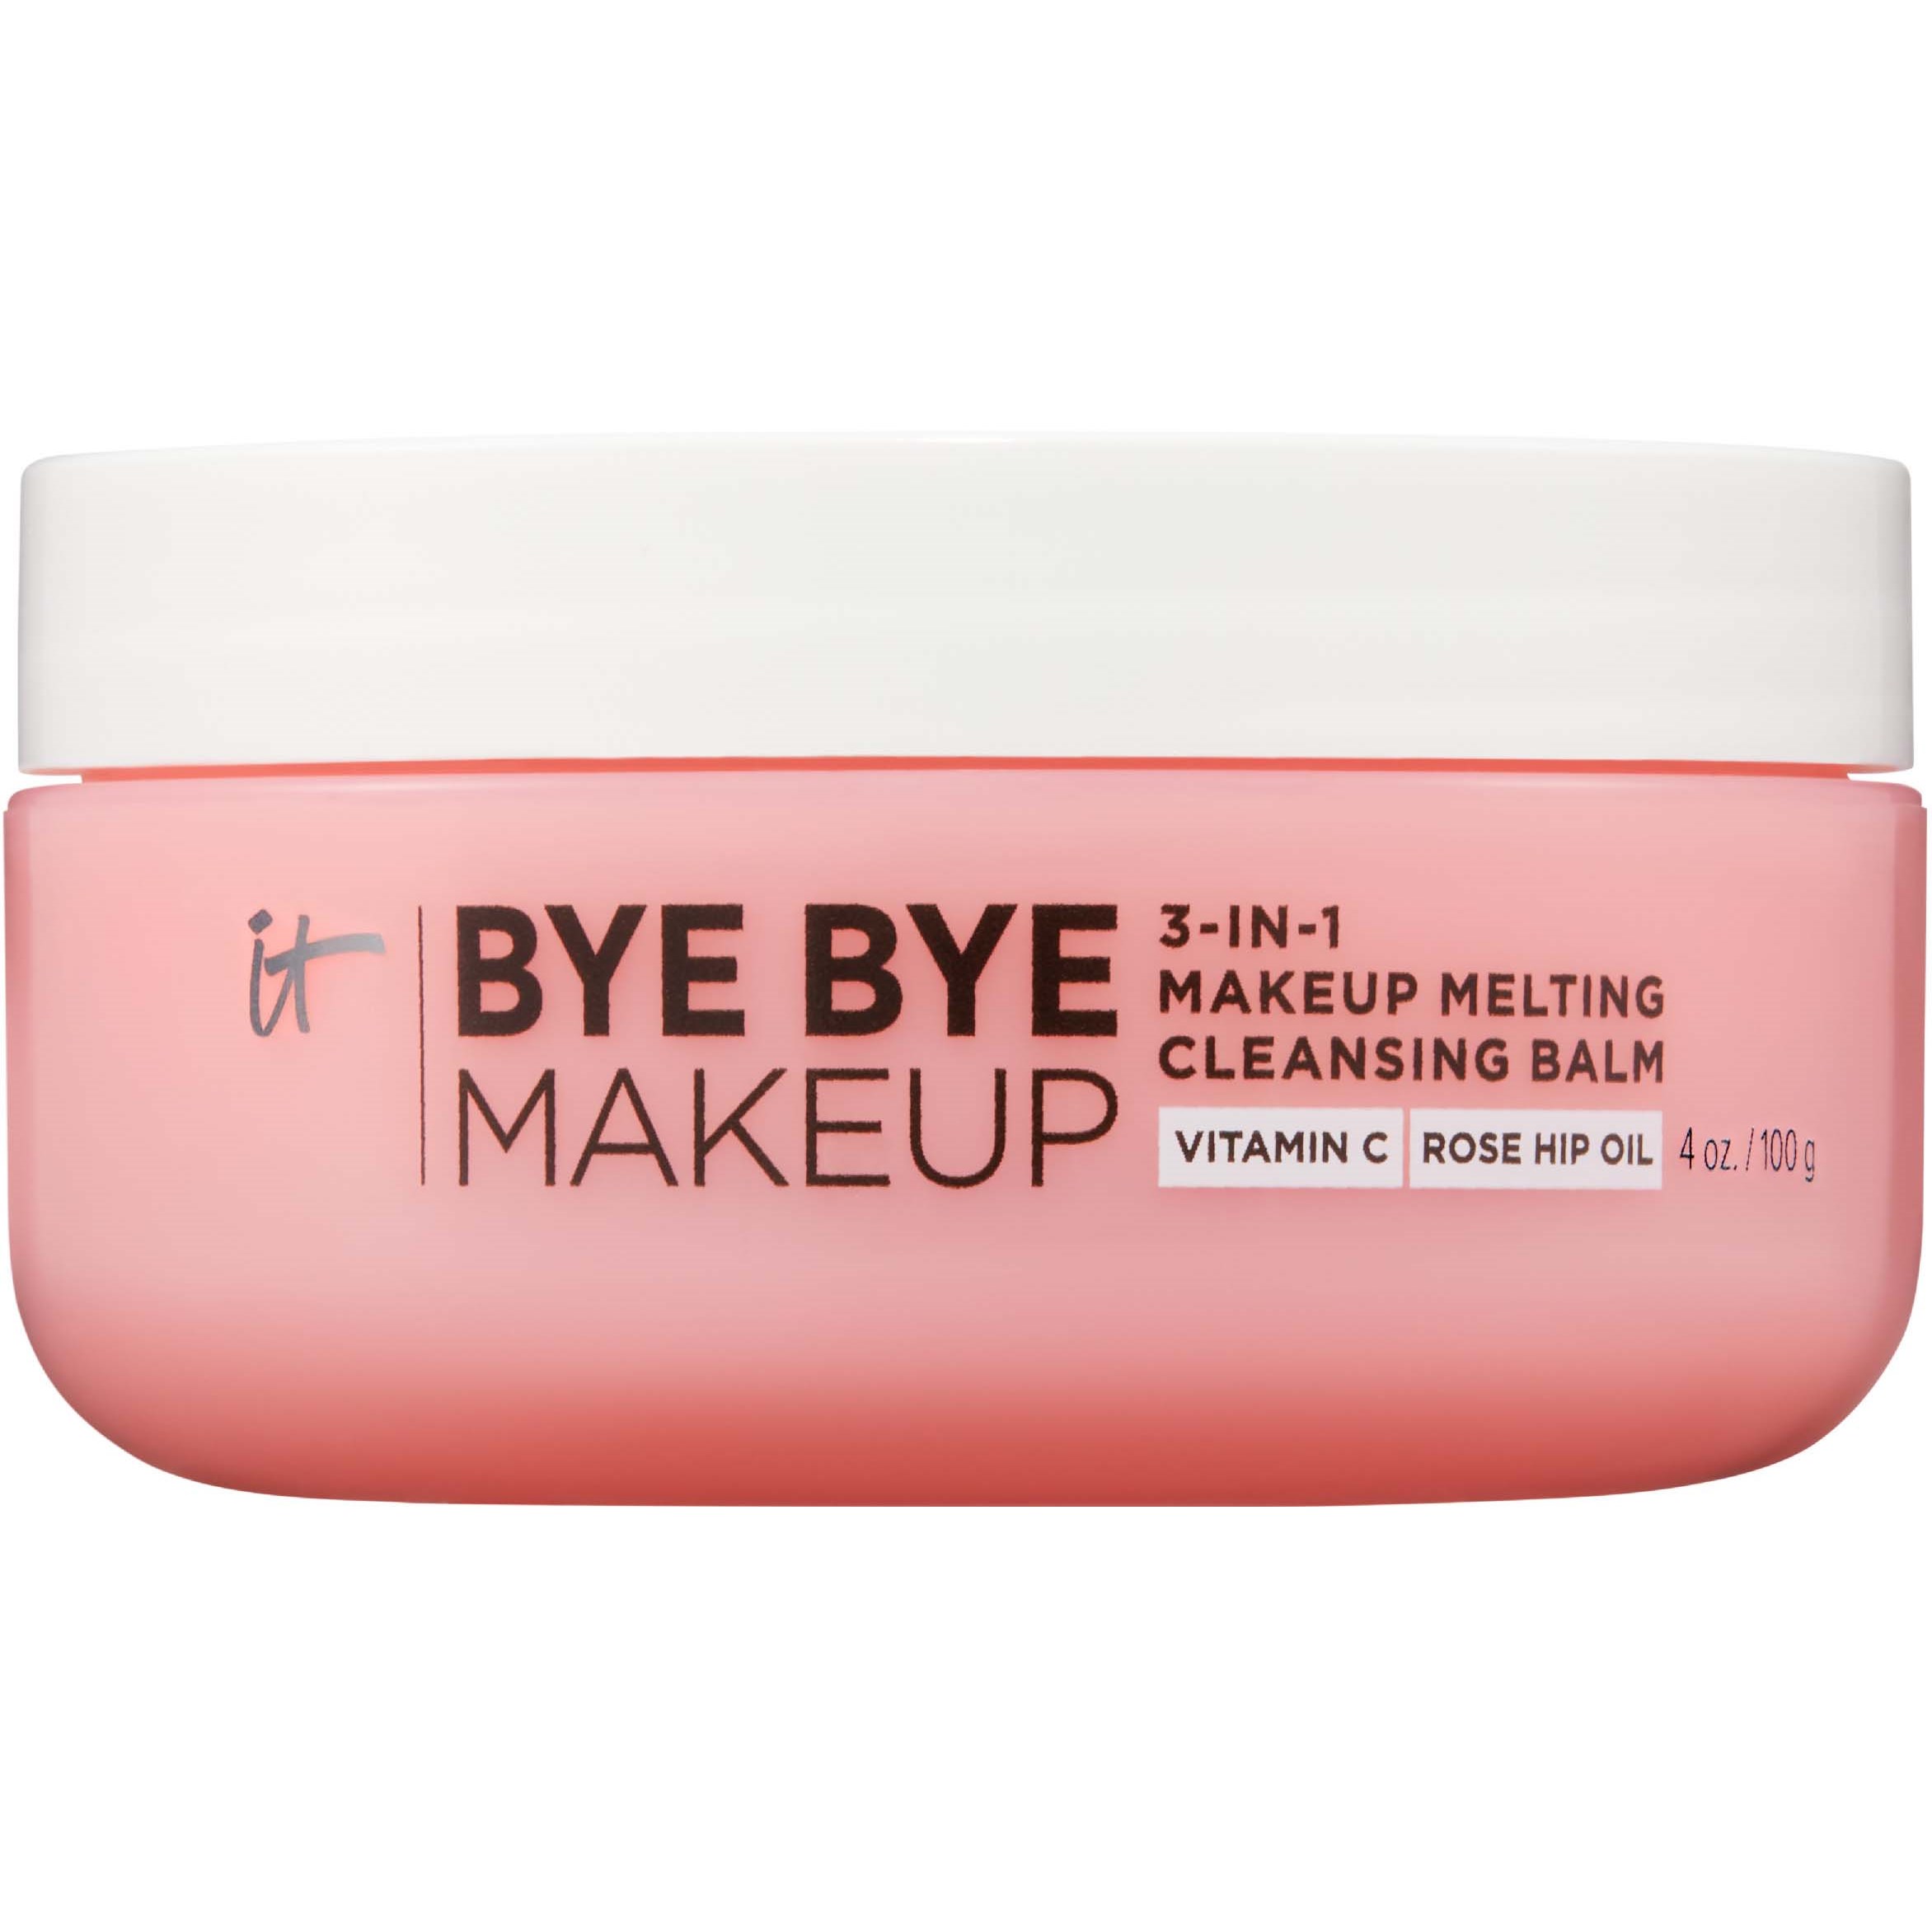 IT Cosmetics Bye Bye Makeup 3-in-1 Makeup Melting Cleansing Balm 100 g